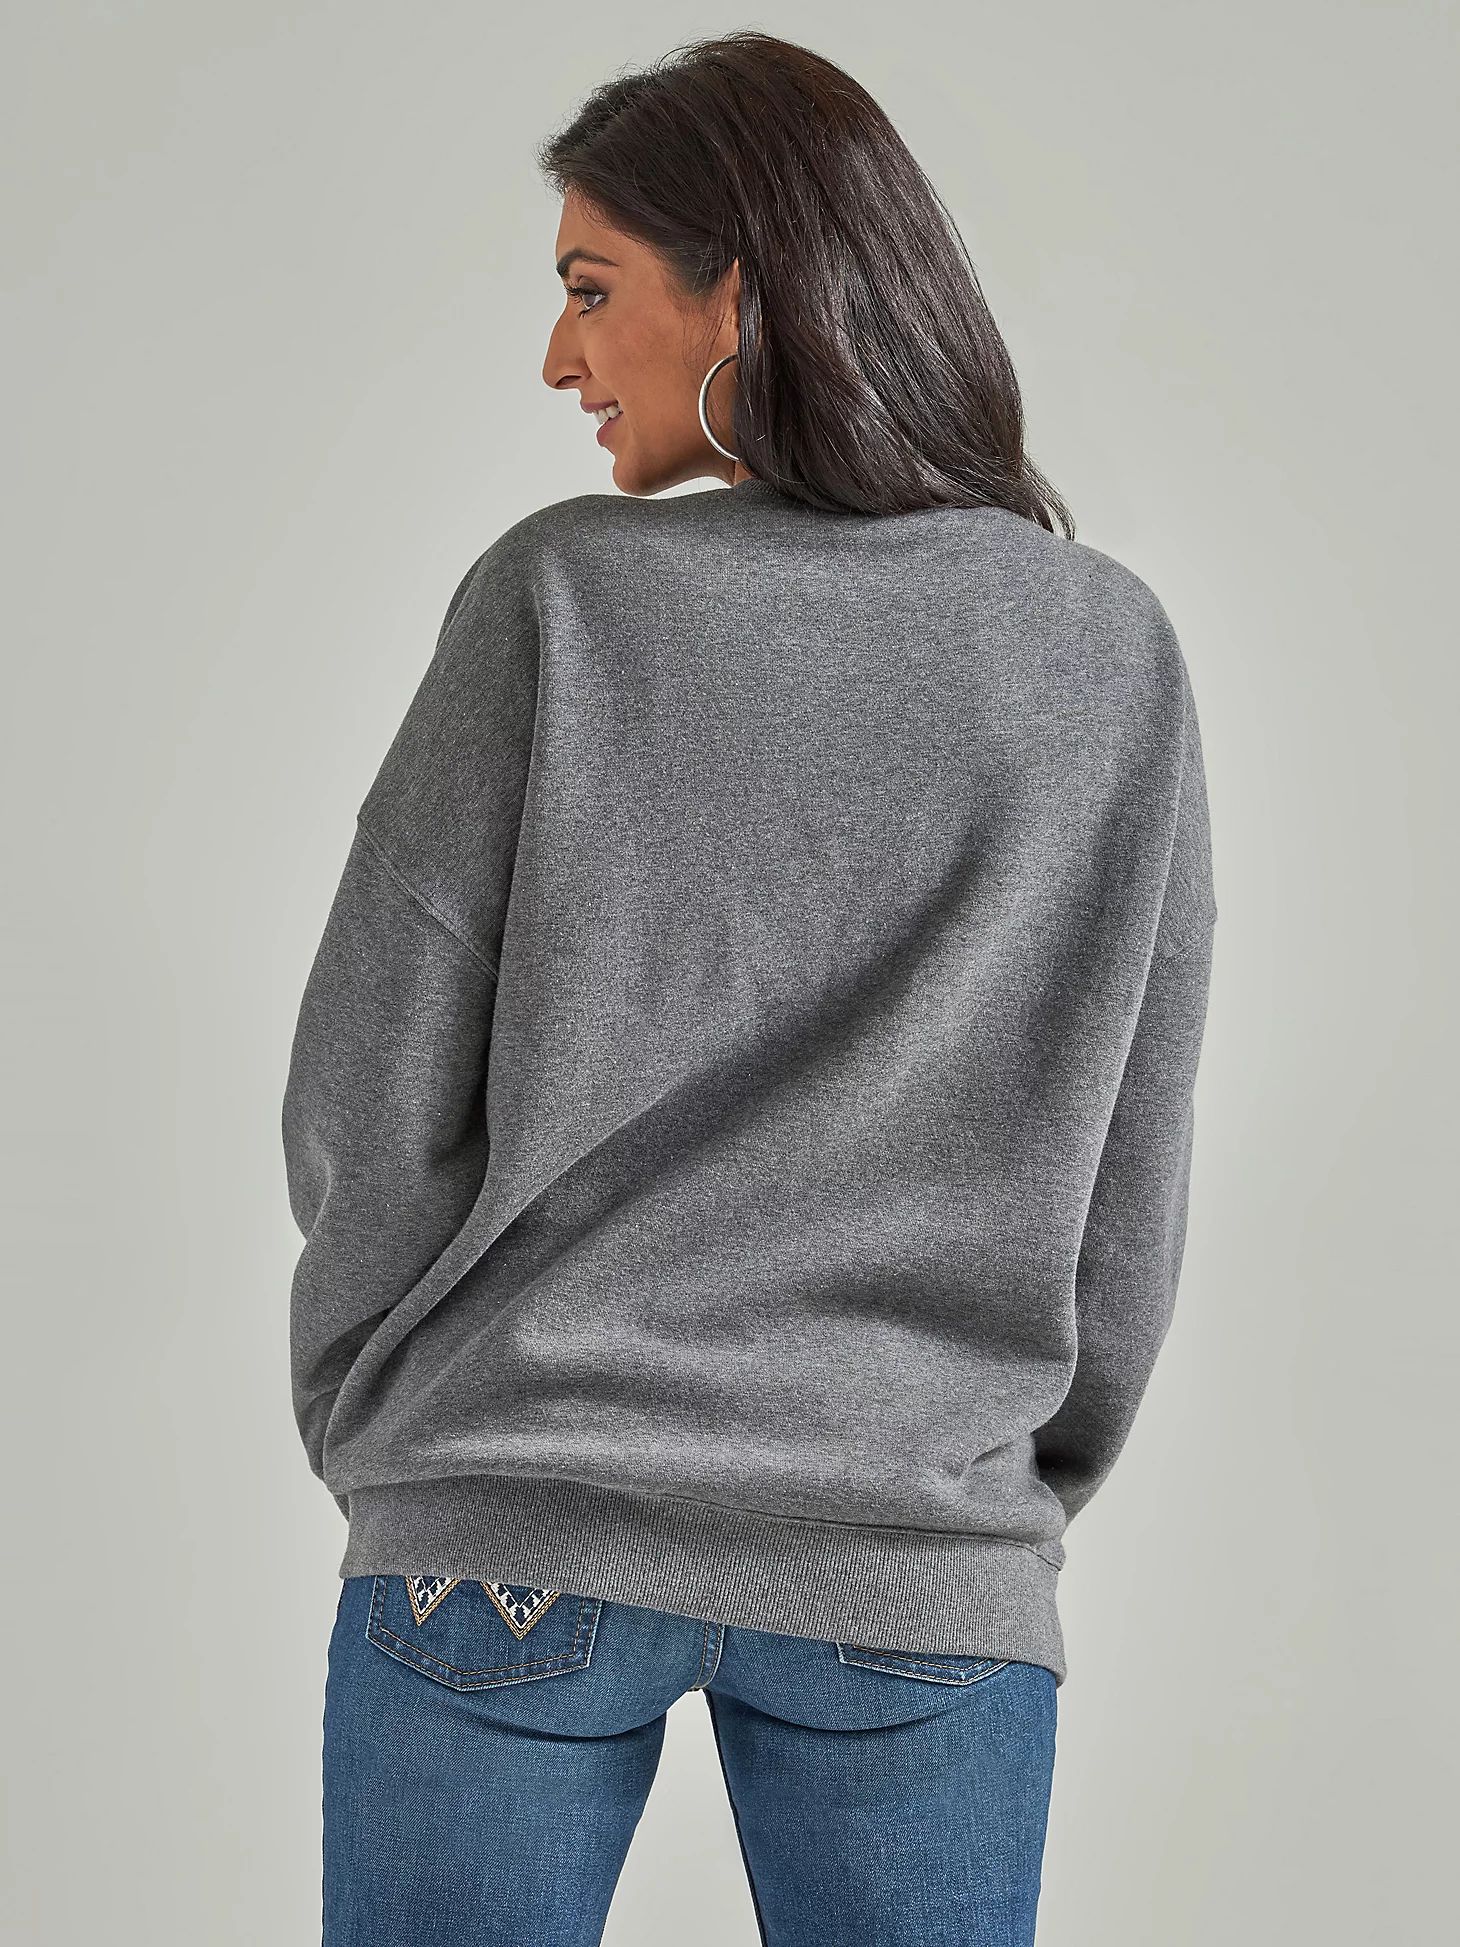 Women's Wrangler Retro® Midnight Cowgirl Oversized Sweatshirt in Grey | Wrangler